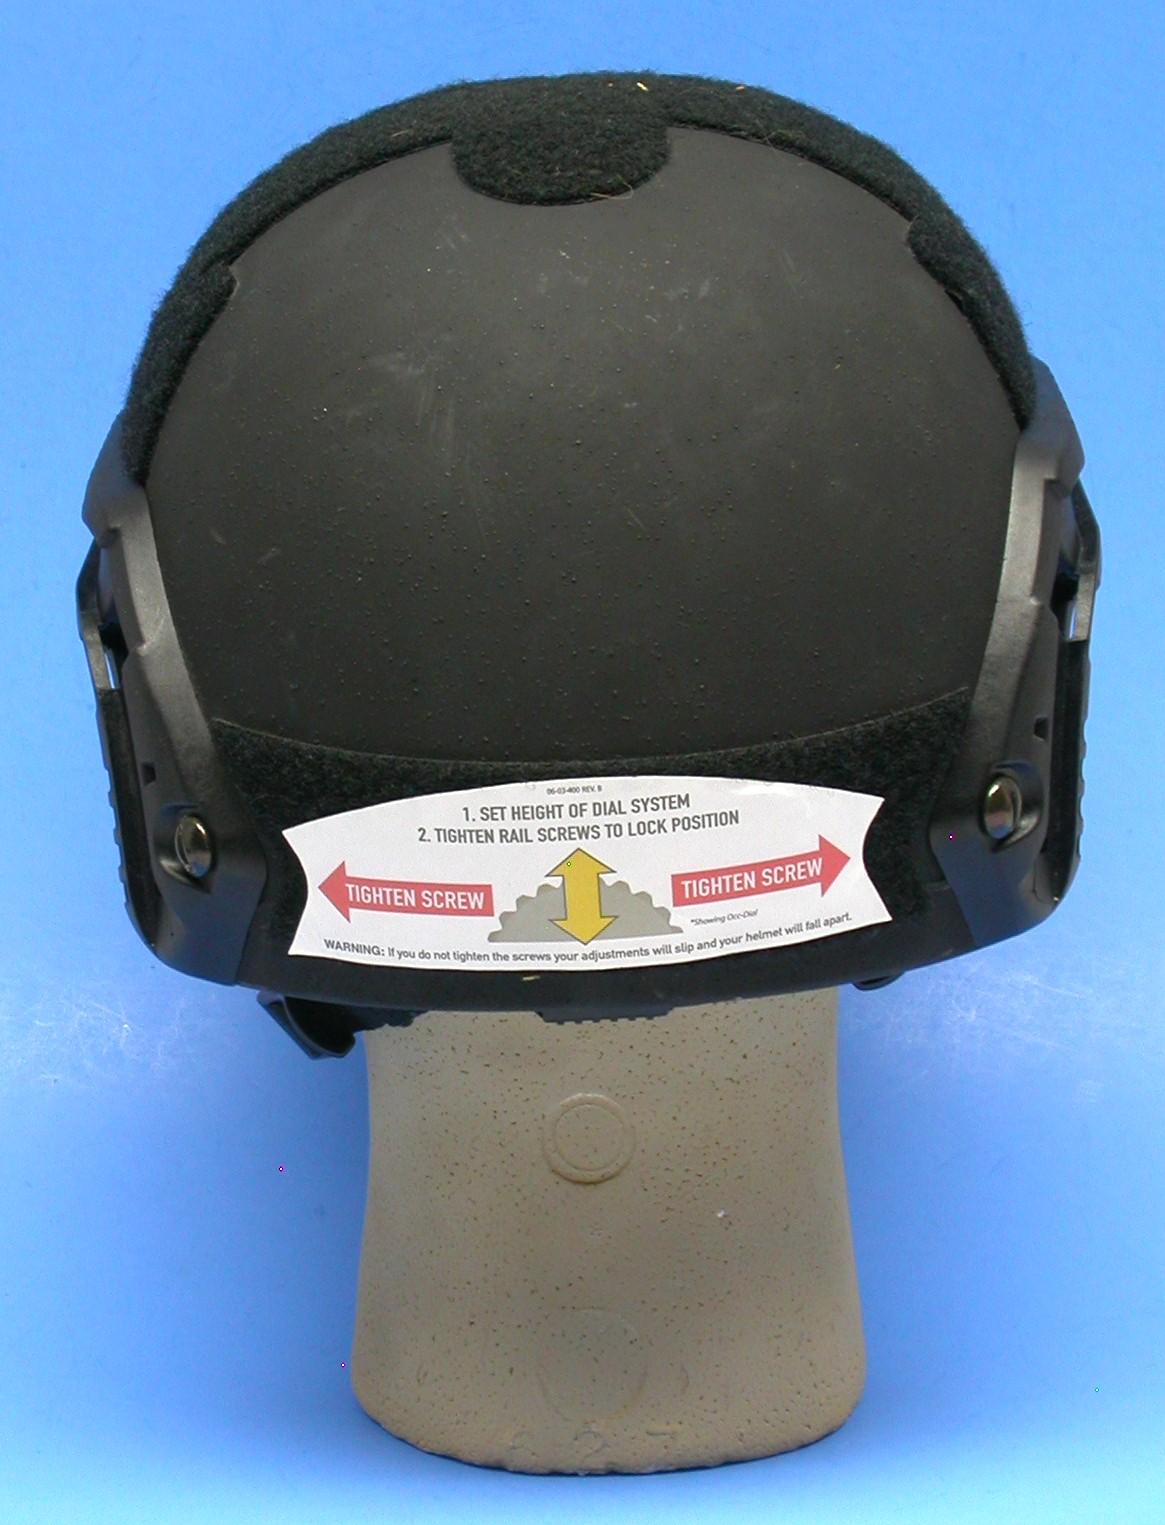 US Military Ops Core FAST LE Ballistic Helmet (MJJ)